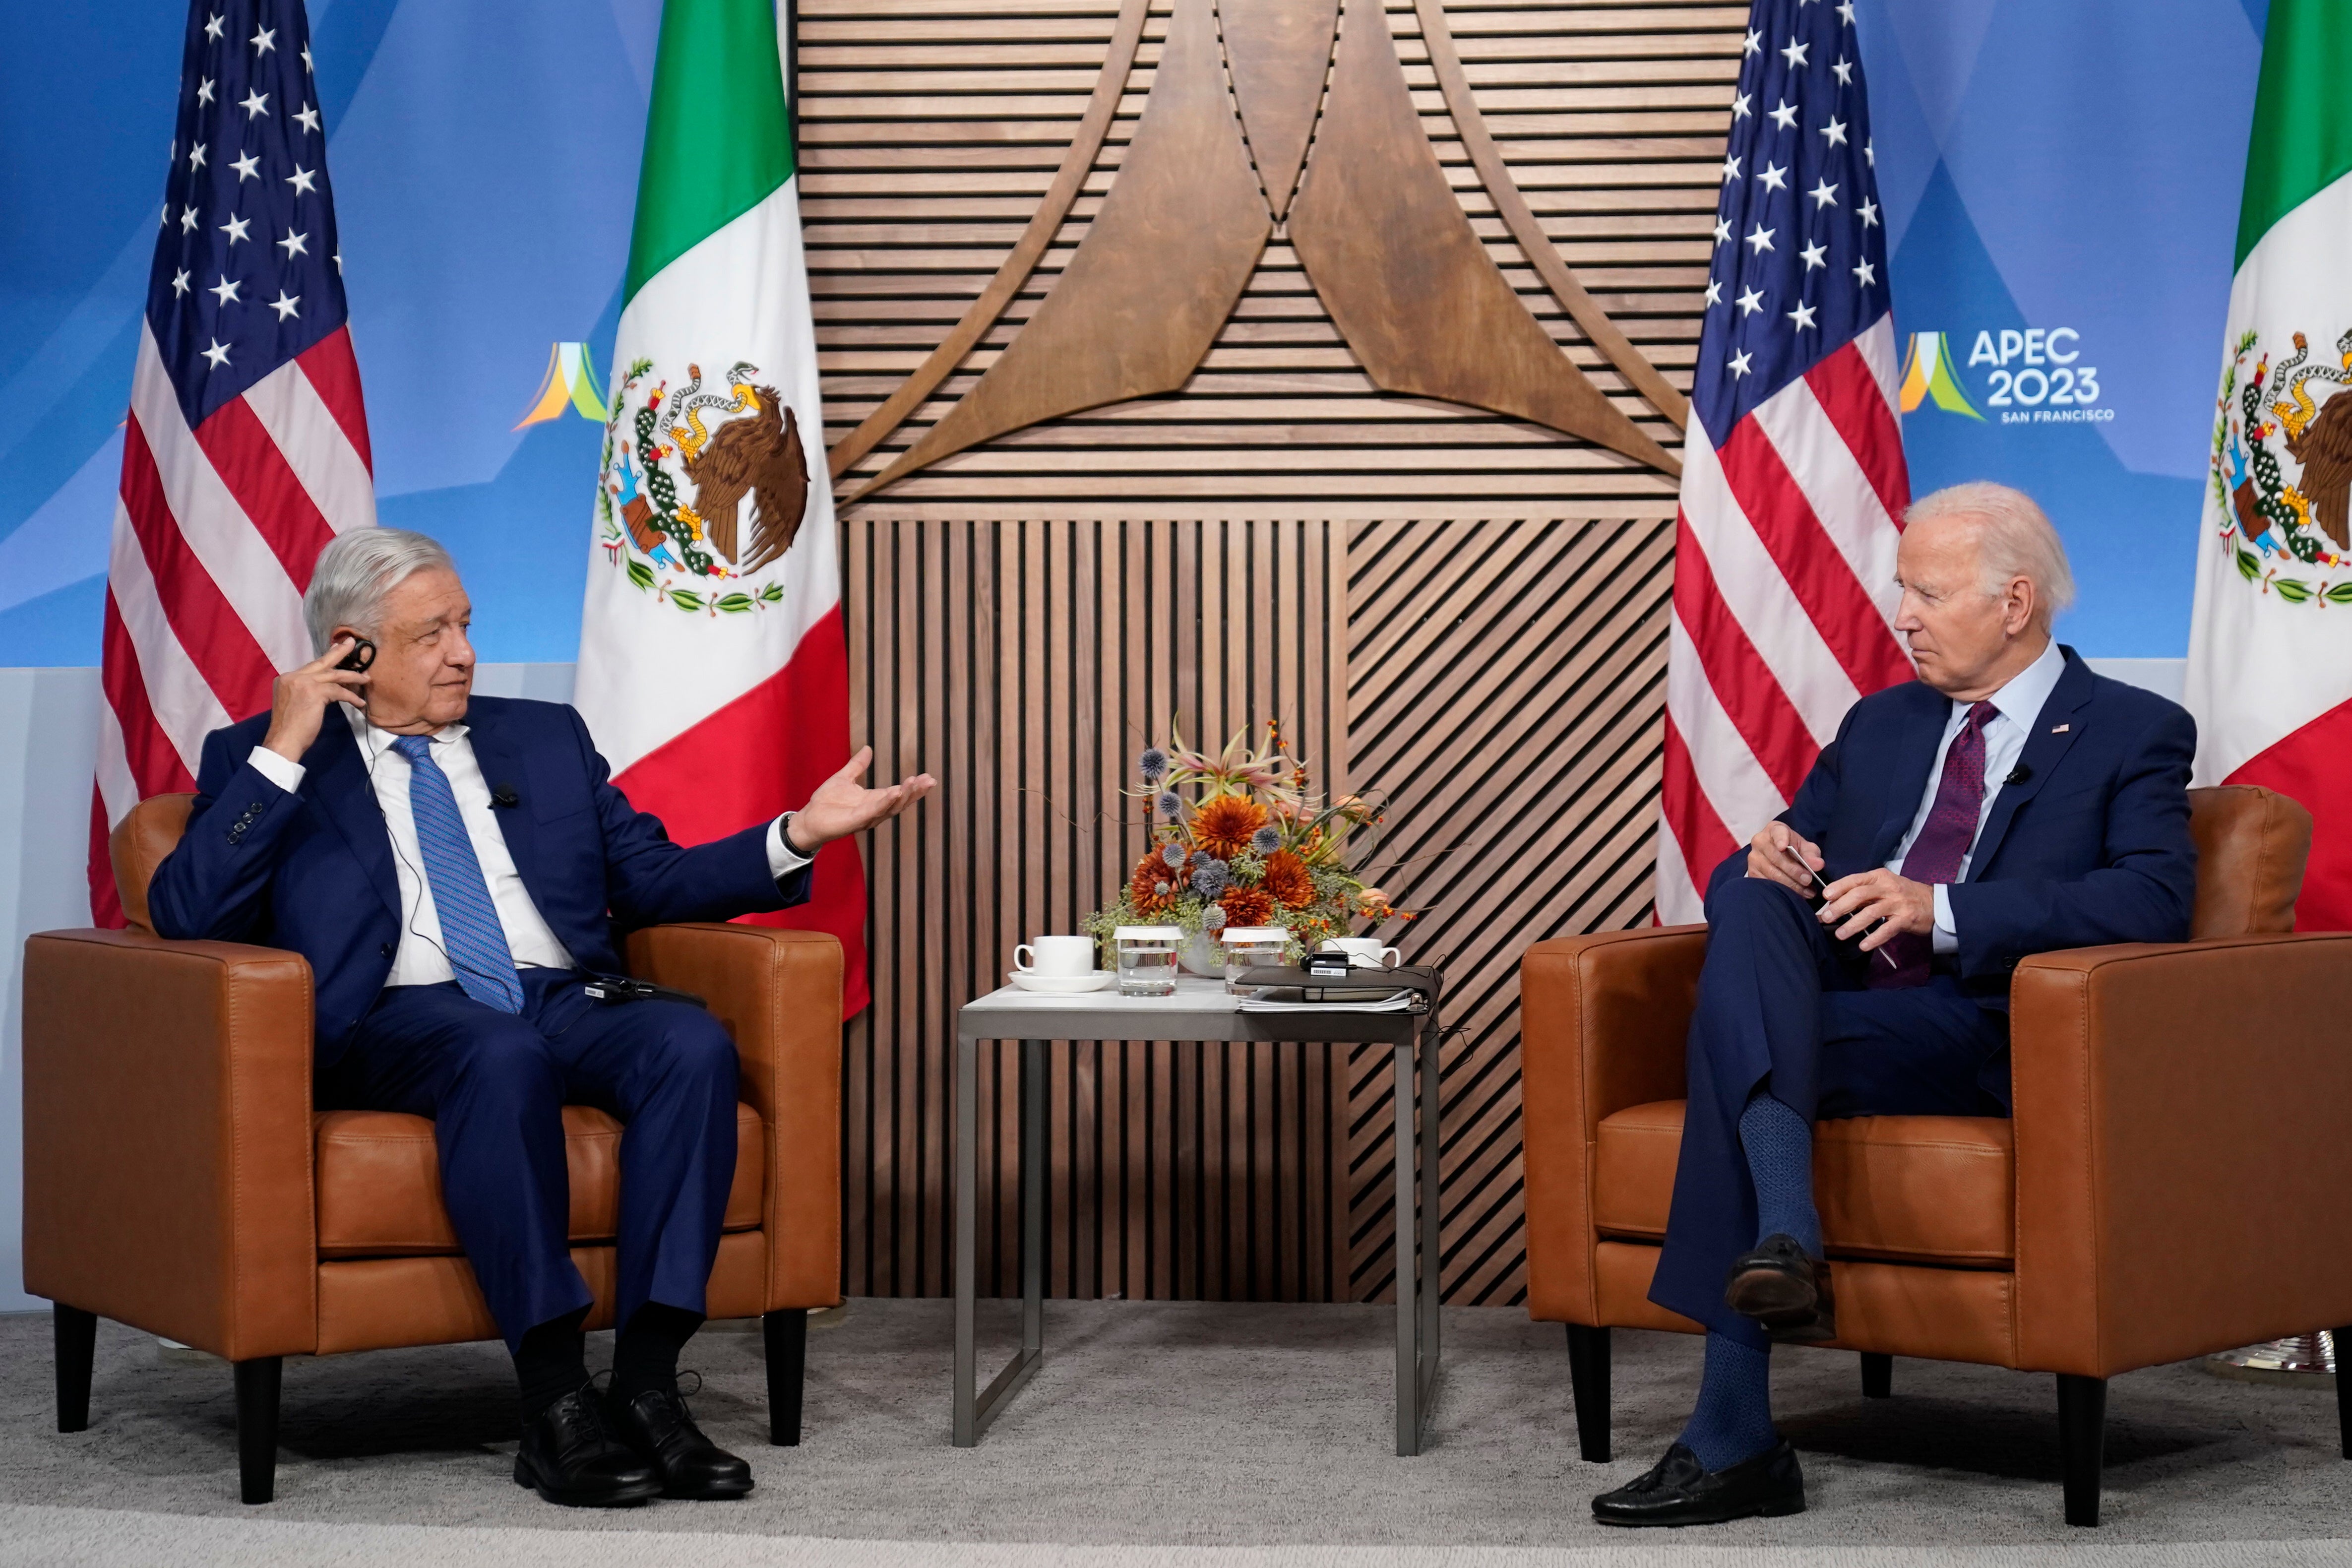 President Joe Biden meets with Mexican President Andres Manuel Lopez Obrador at the APEC summit, Friday, Nov. 17, 2023, in San Francisco. (AP Photo/Evan Vucci)